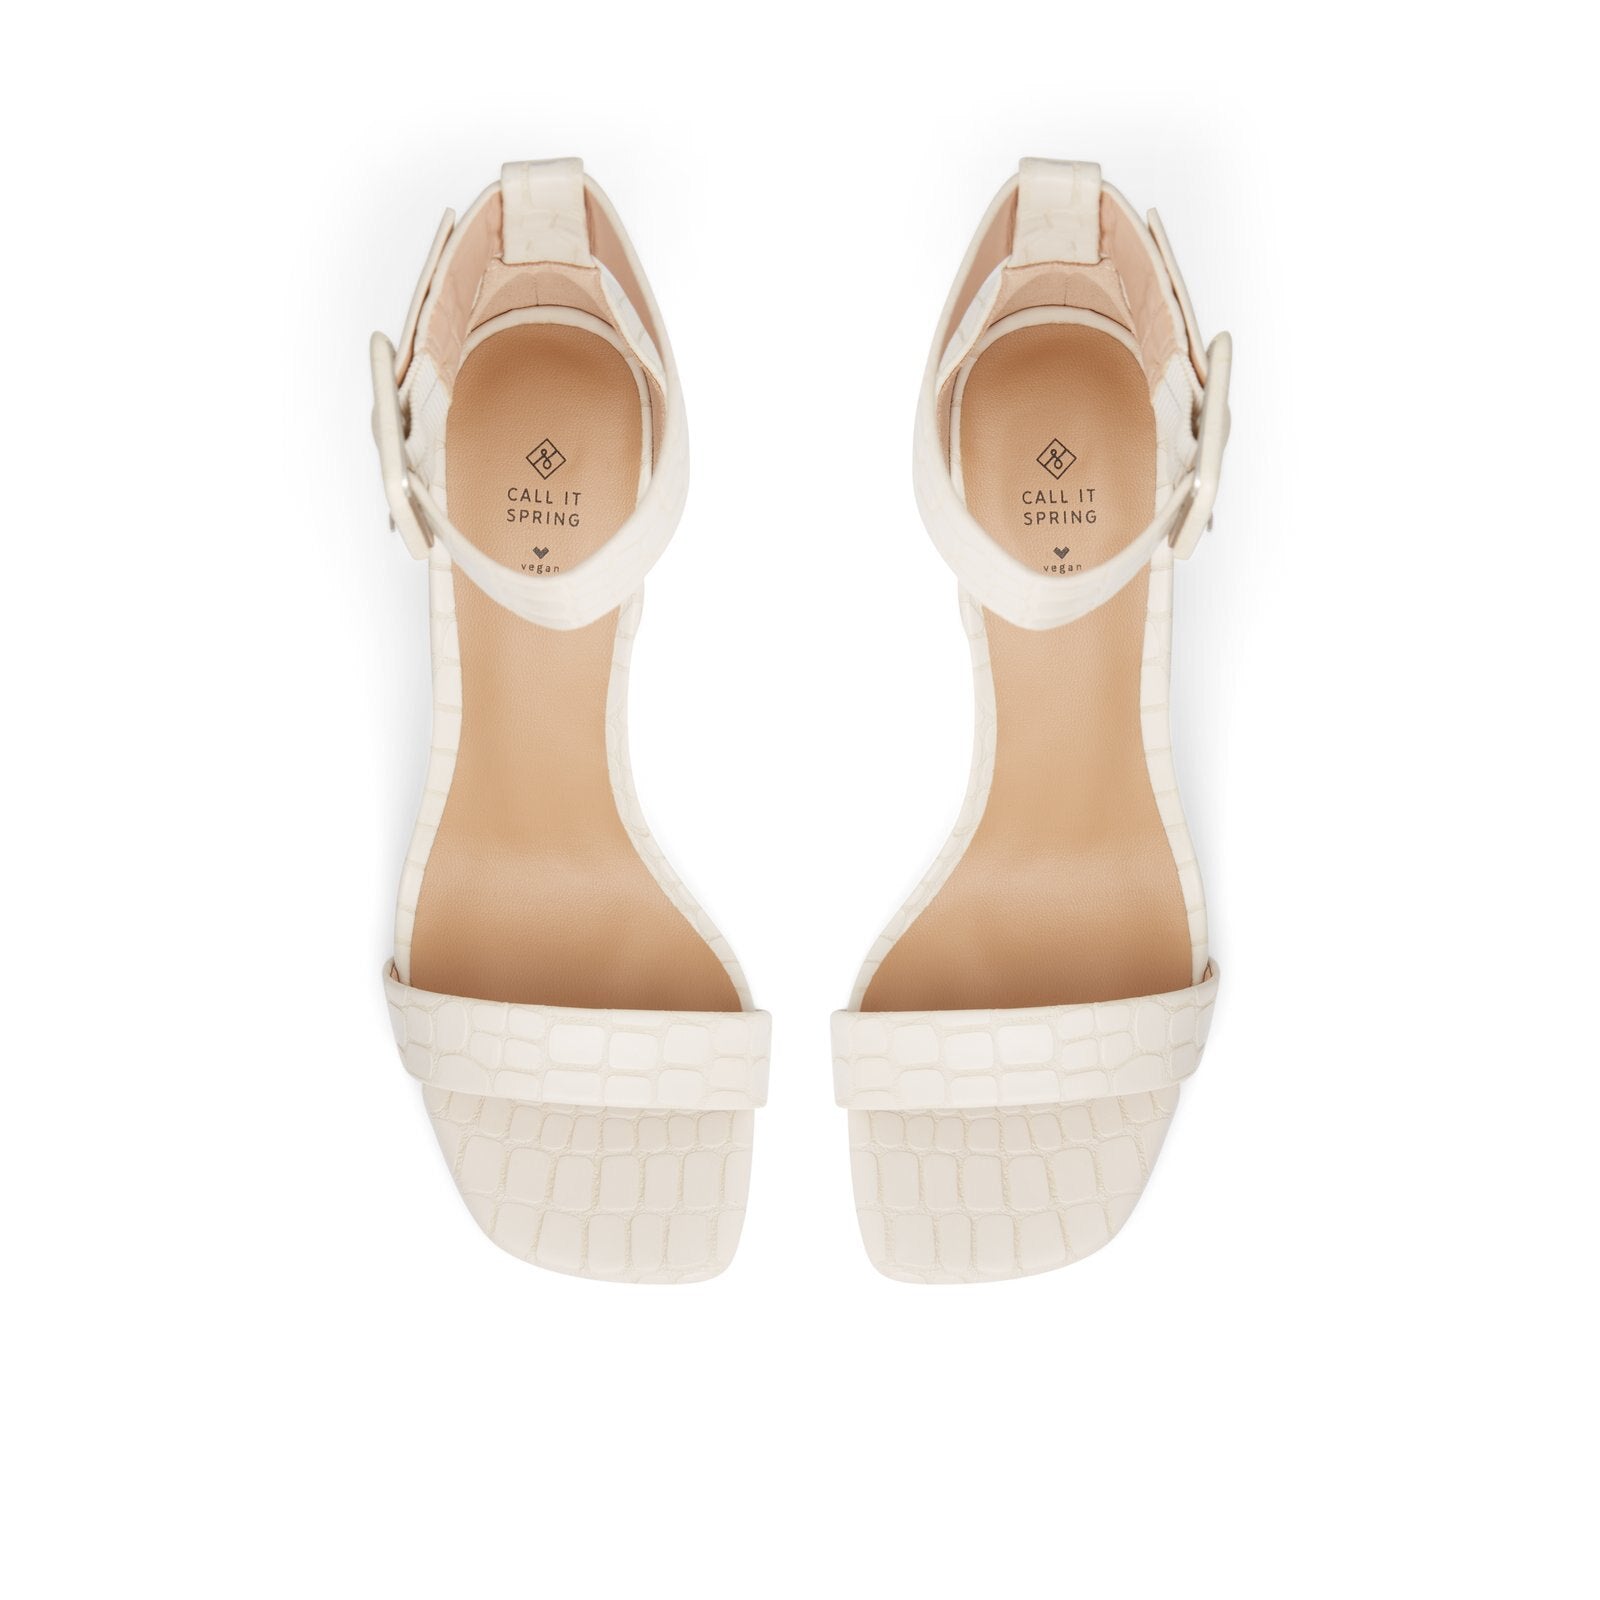 Elenna / Heeled Sandals Women Shoes - Ice - CALL IT SPRING KSA